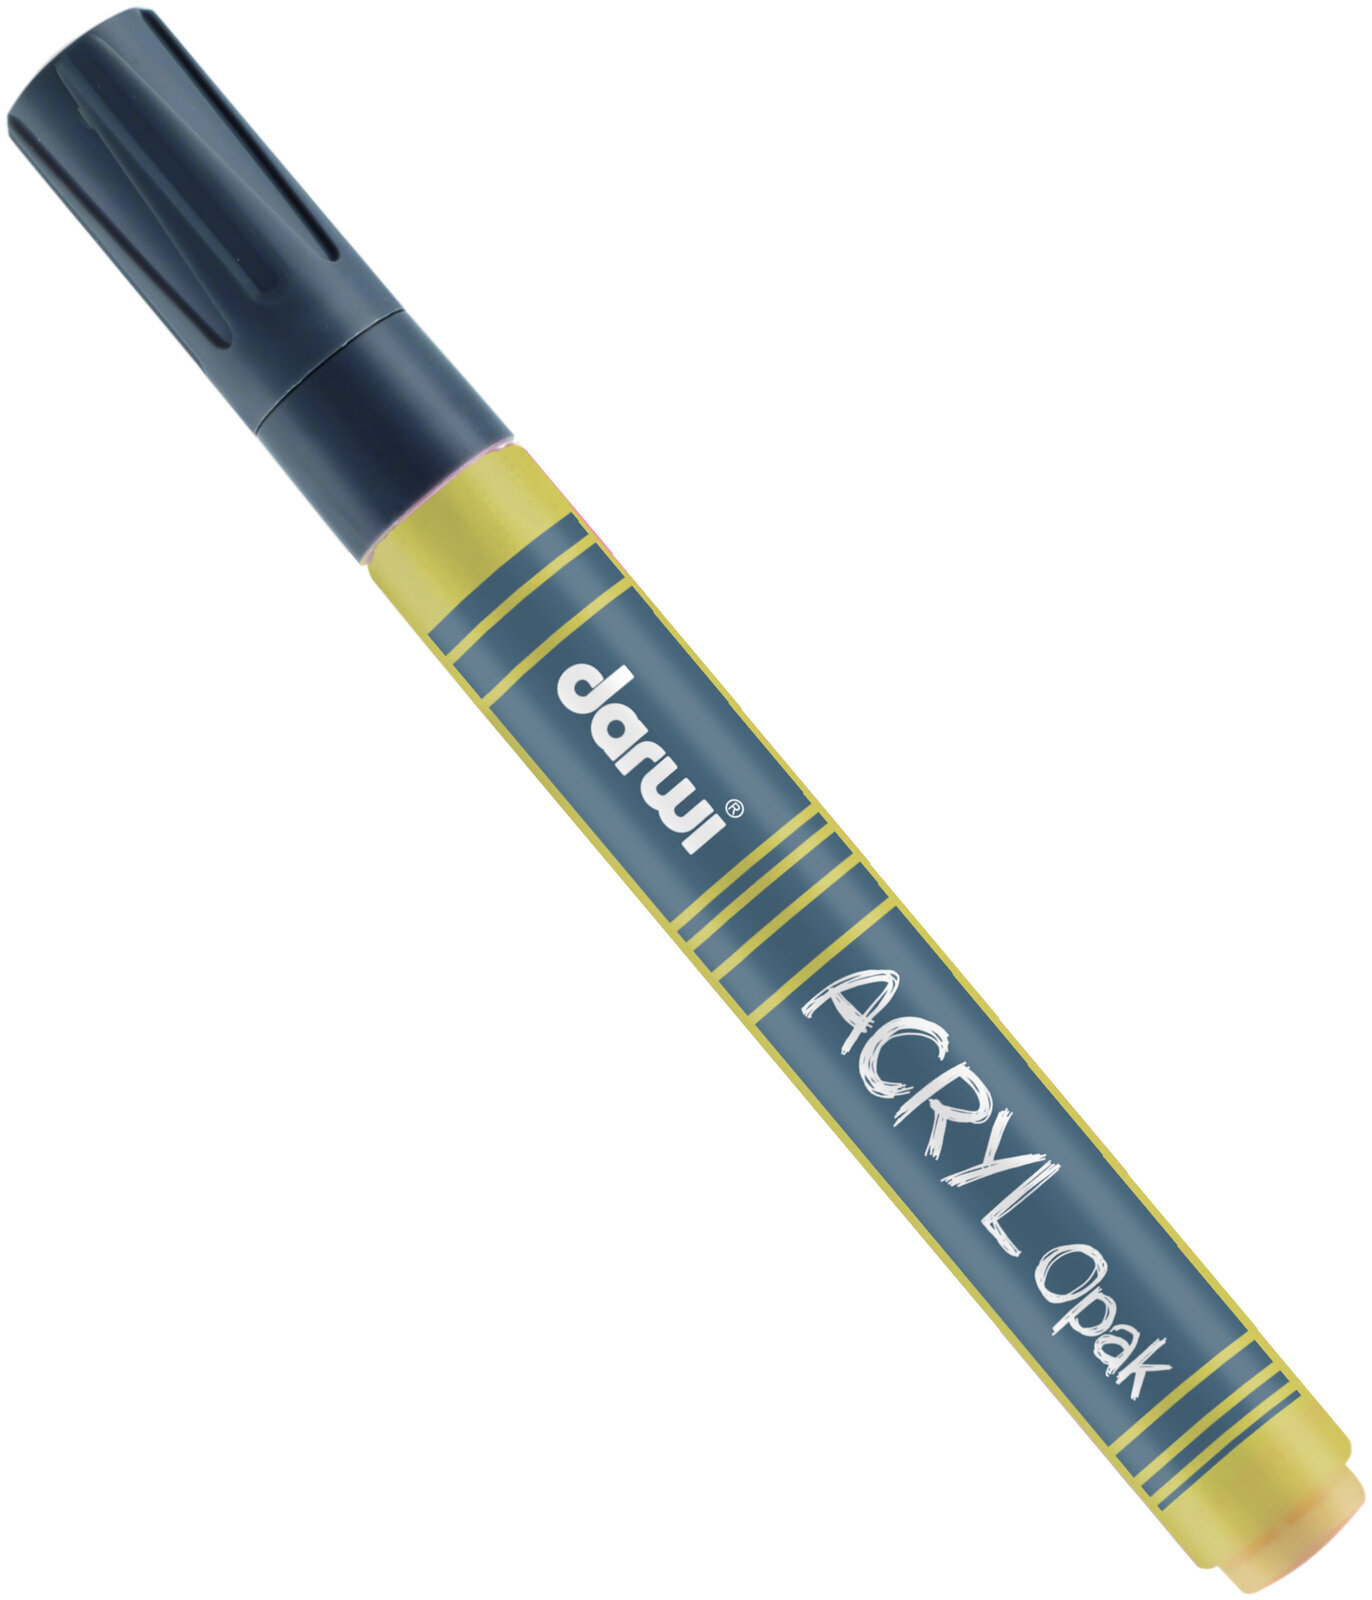 Felt-Tip Pen Darwi Acryl Opak Marker Gold 6 ml 1 pc